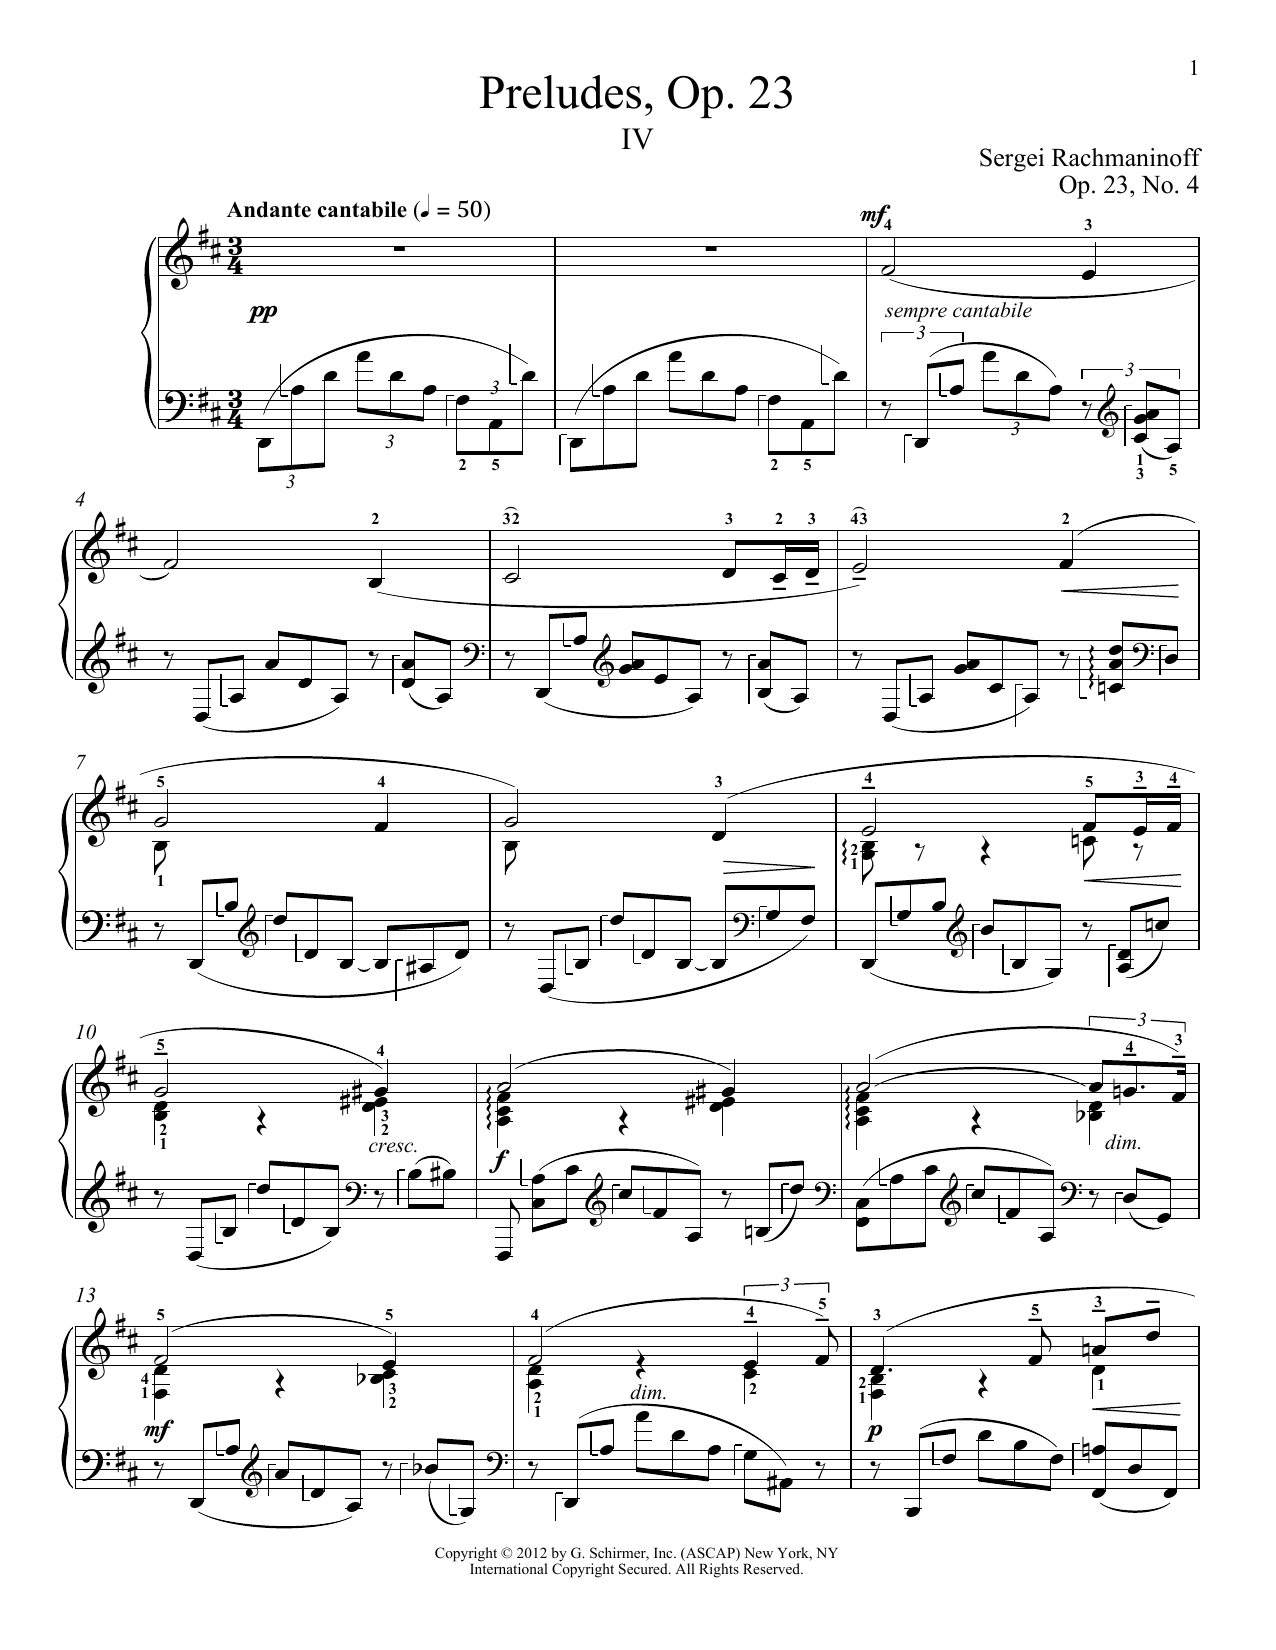 Sergei Rachmaninoff Prelude In D Major, Op. 23, No. 4 sheet music notes printable PDF score